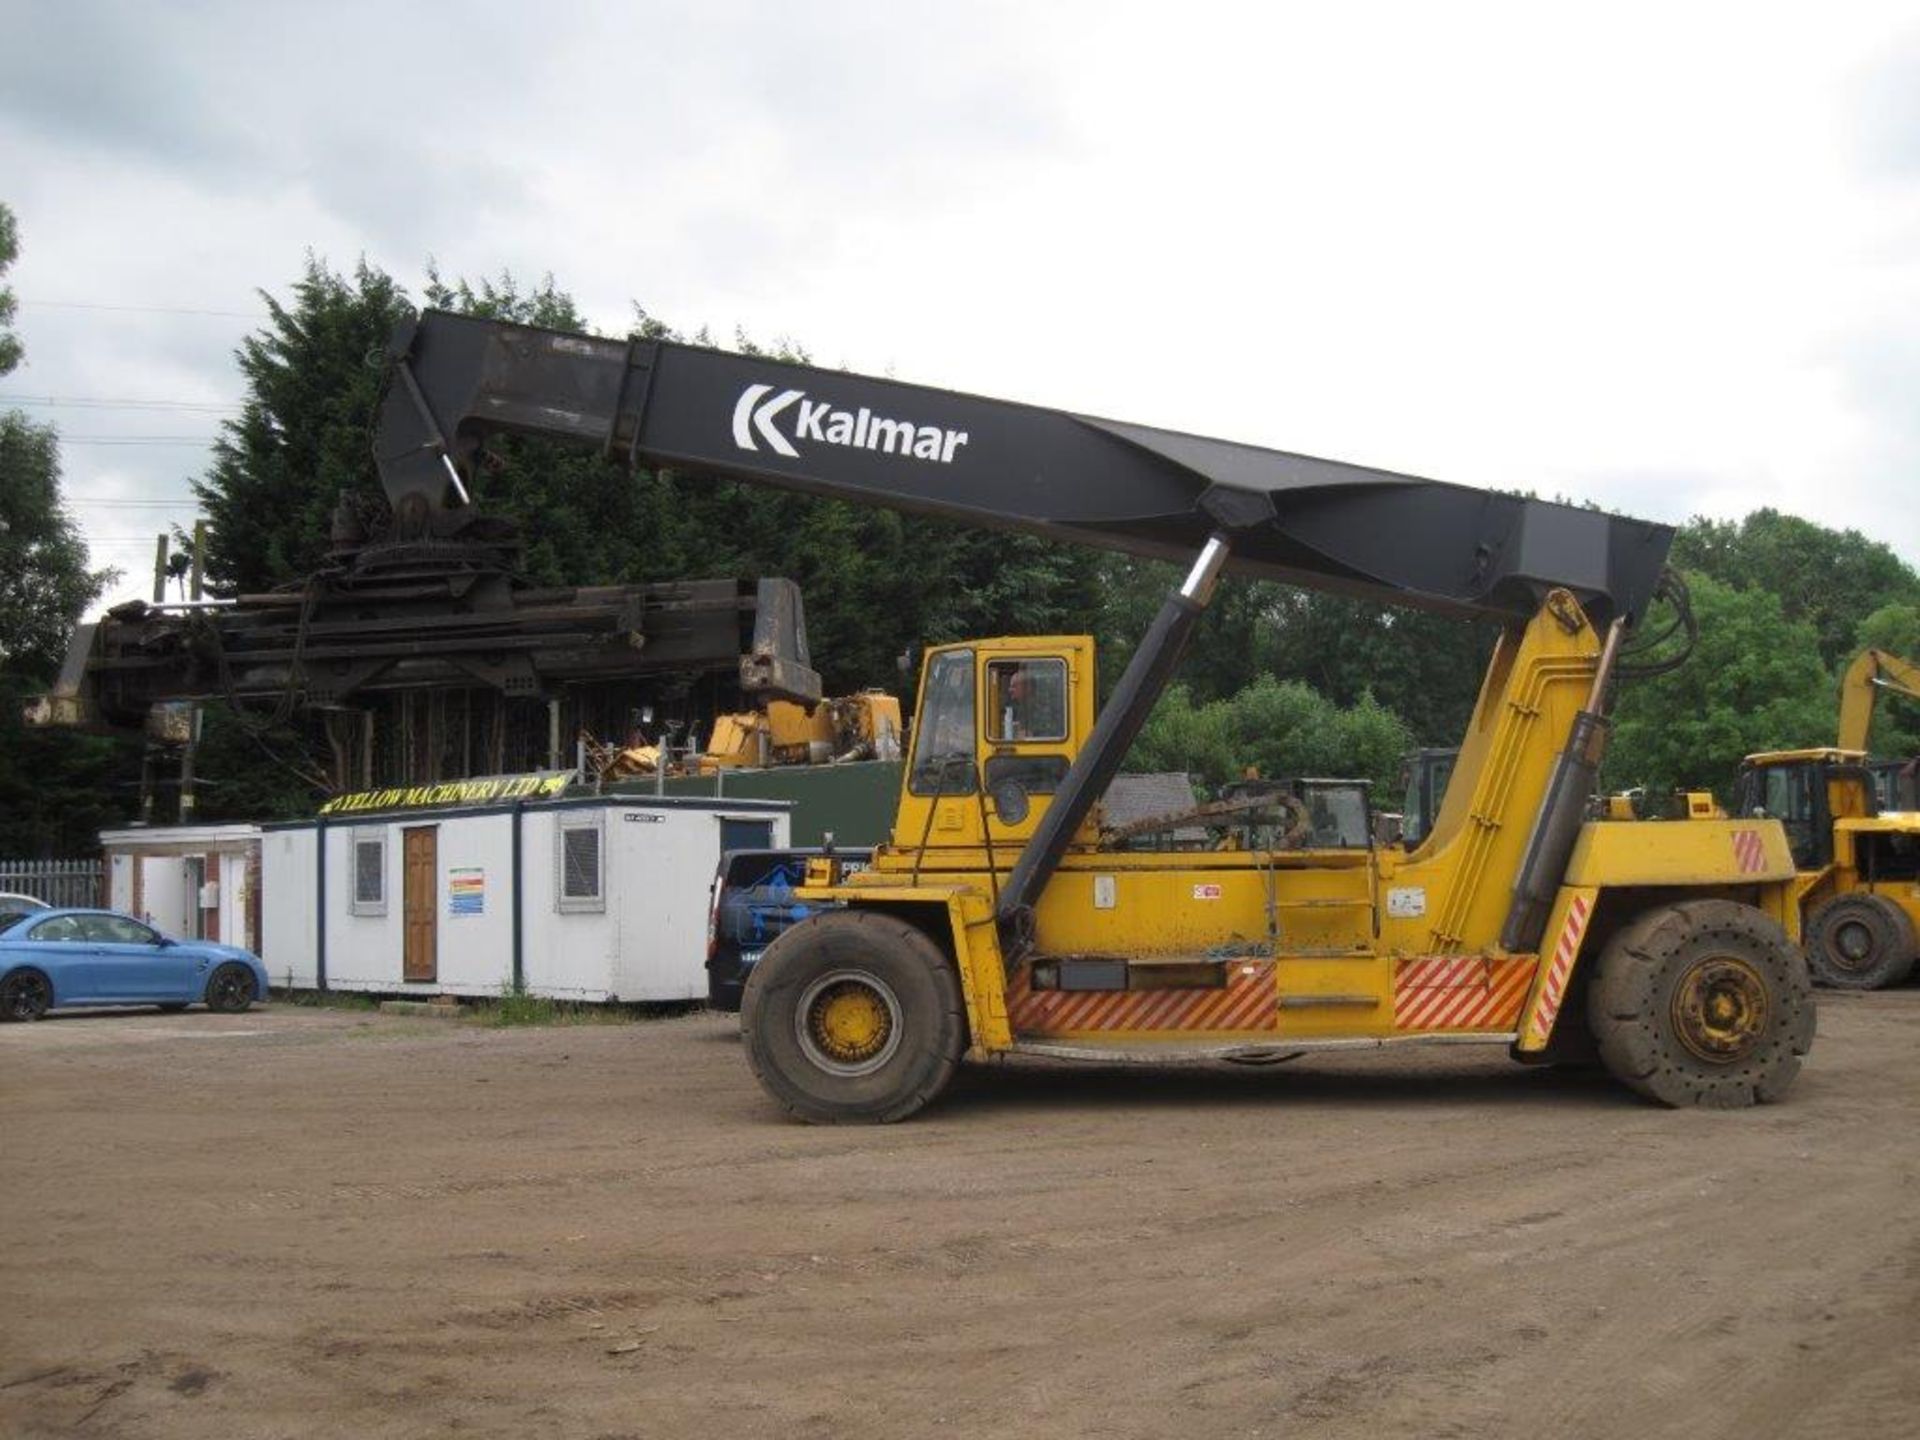 Kalmar Container Reachstacker - Image 2 of 3